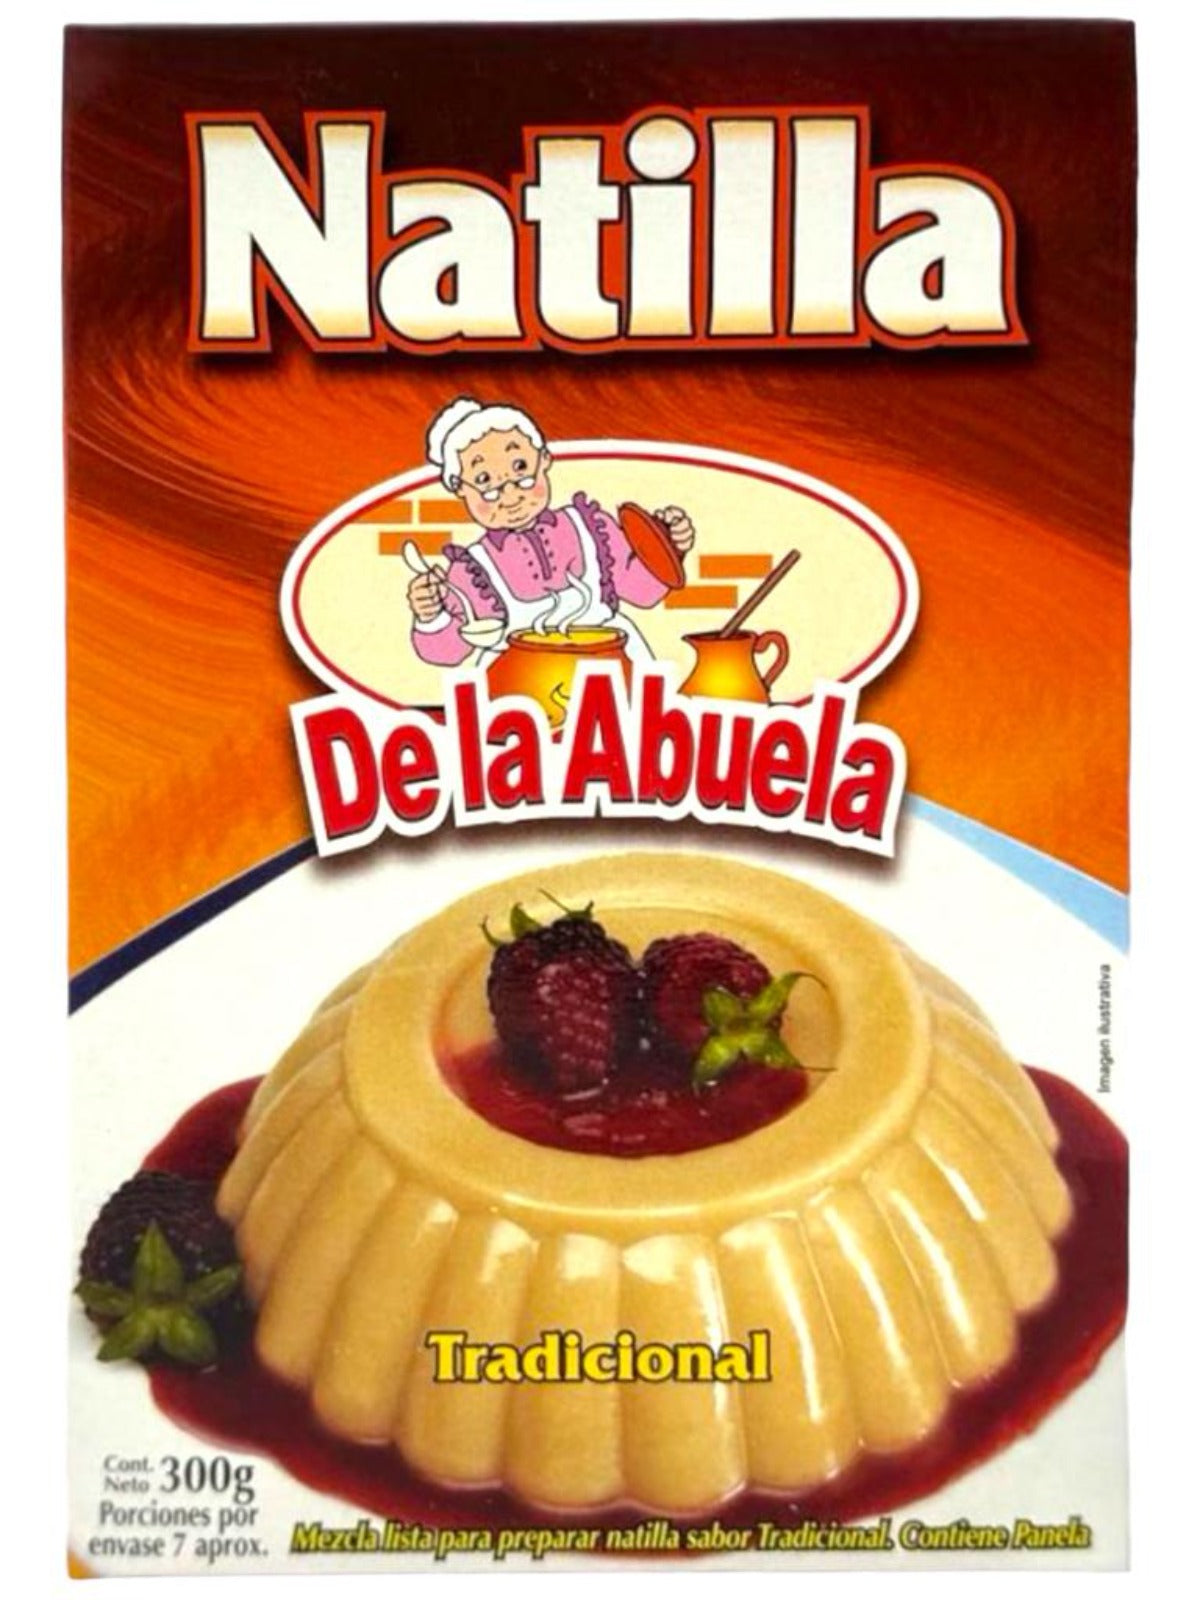 De la Abuela Colombian Natilla 300g ea 4 Pack 1200g Total Use By August 2025